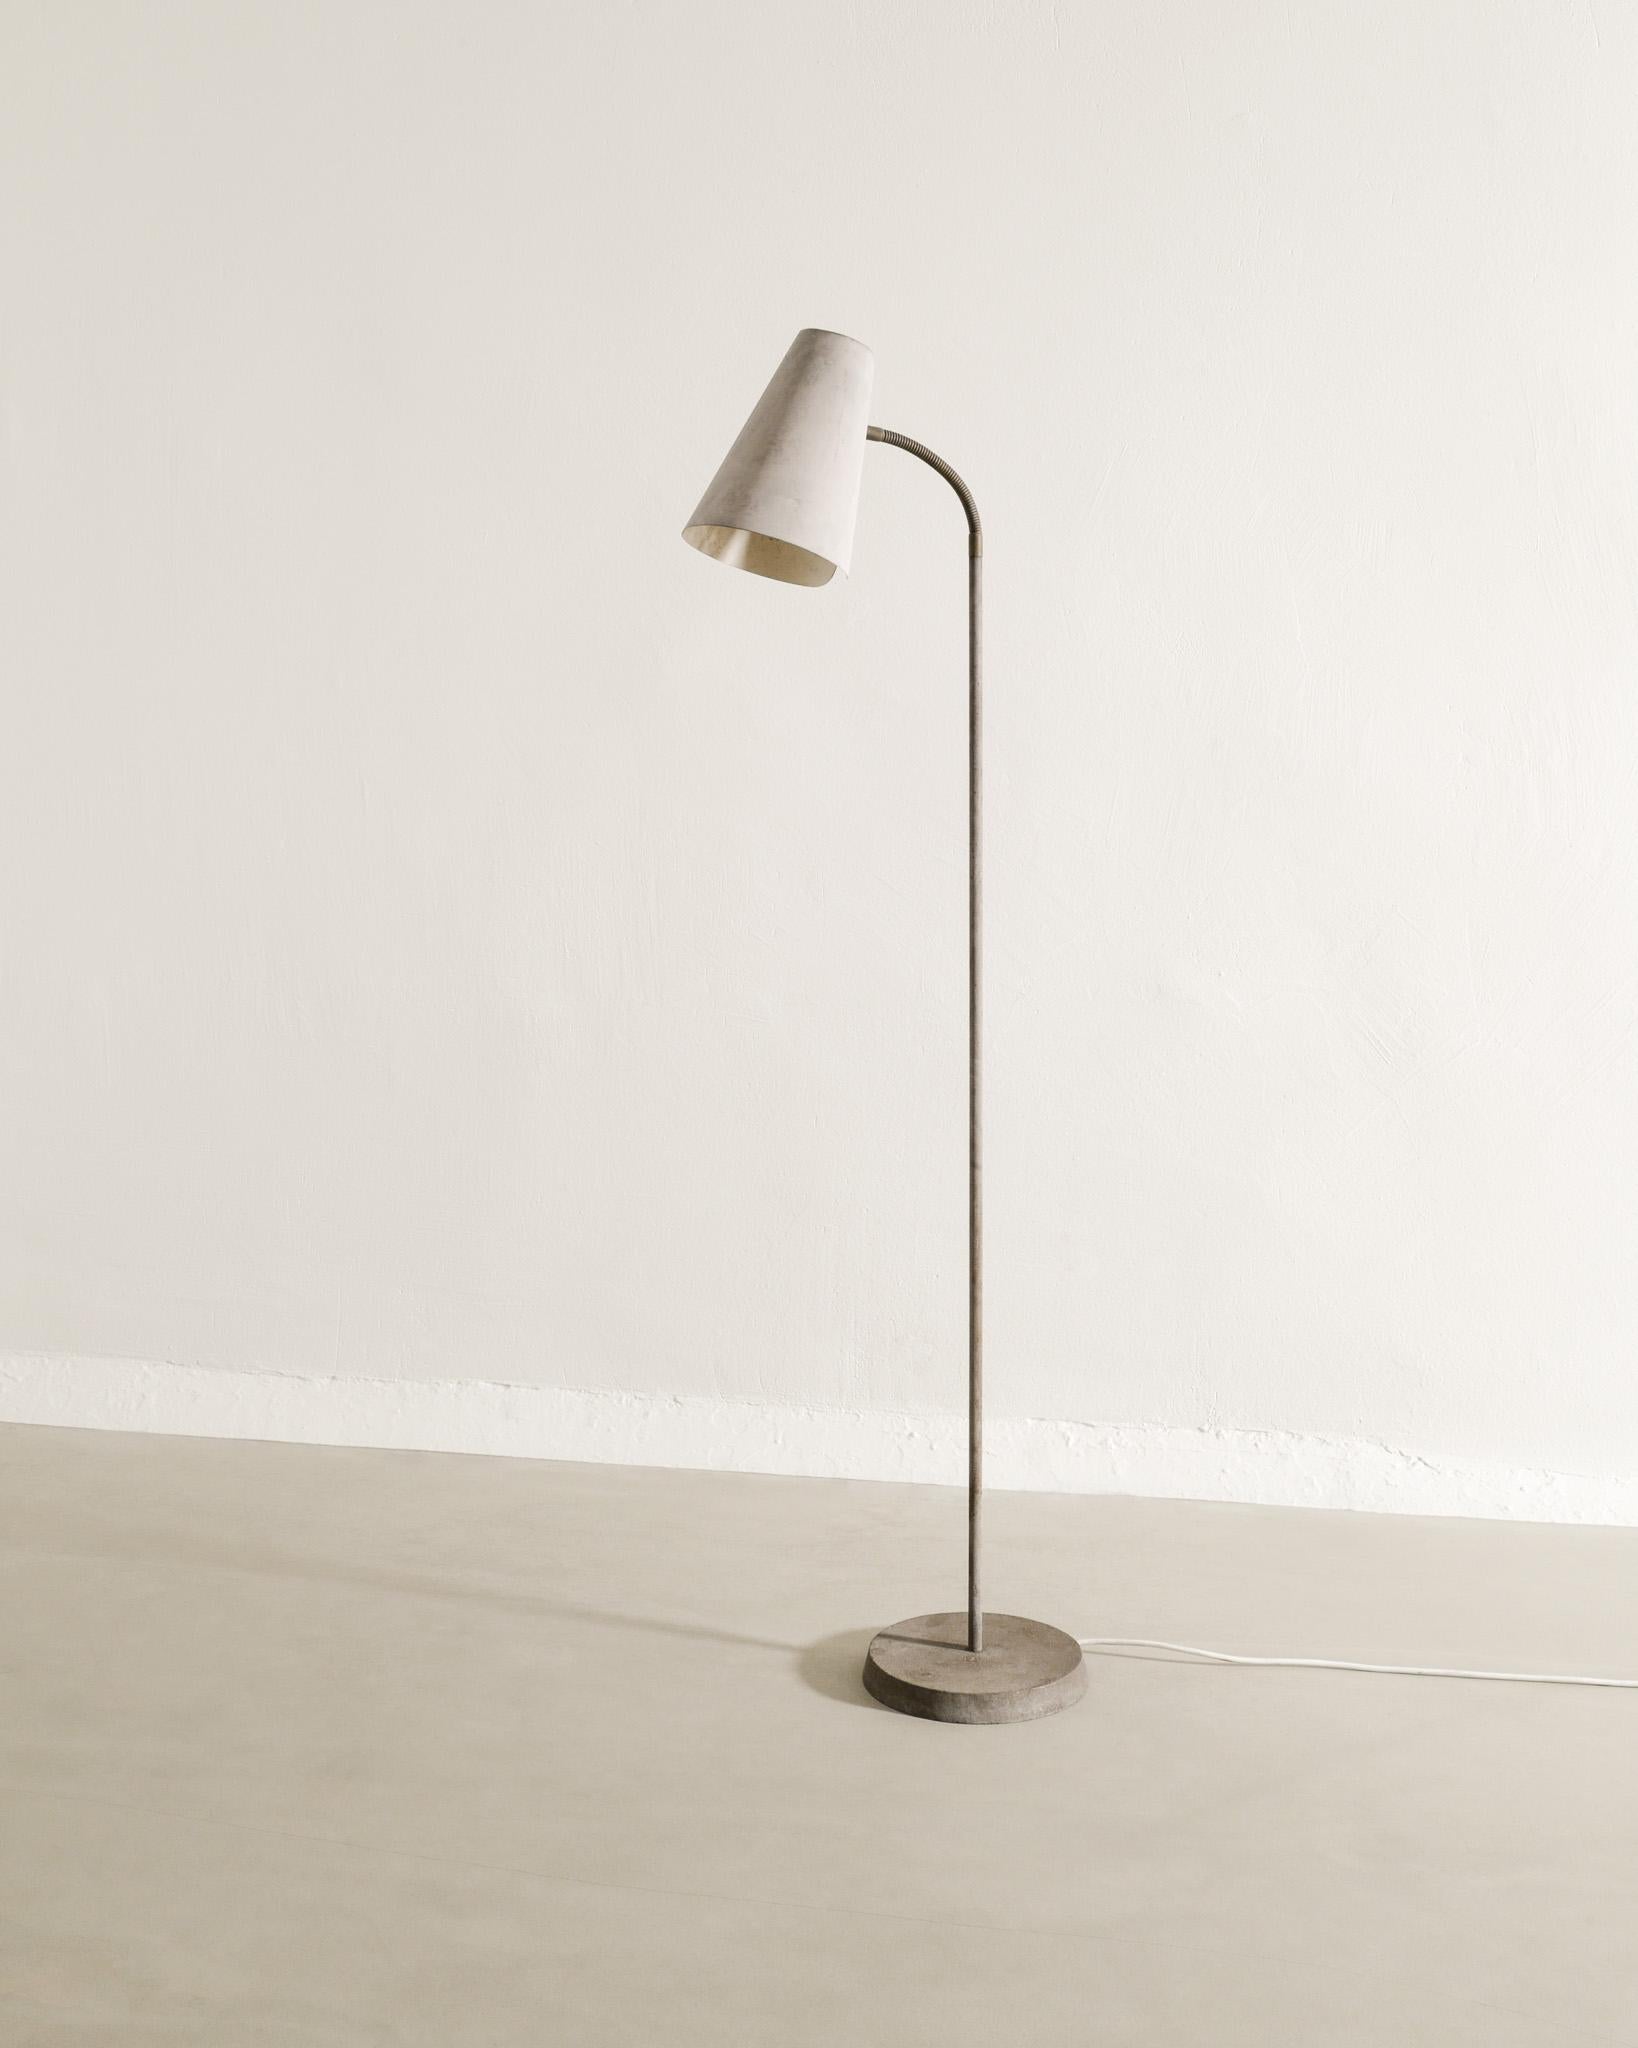 Rare Swedish mid century floor lamp model 